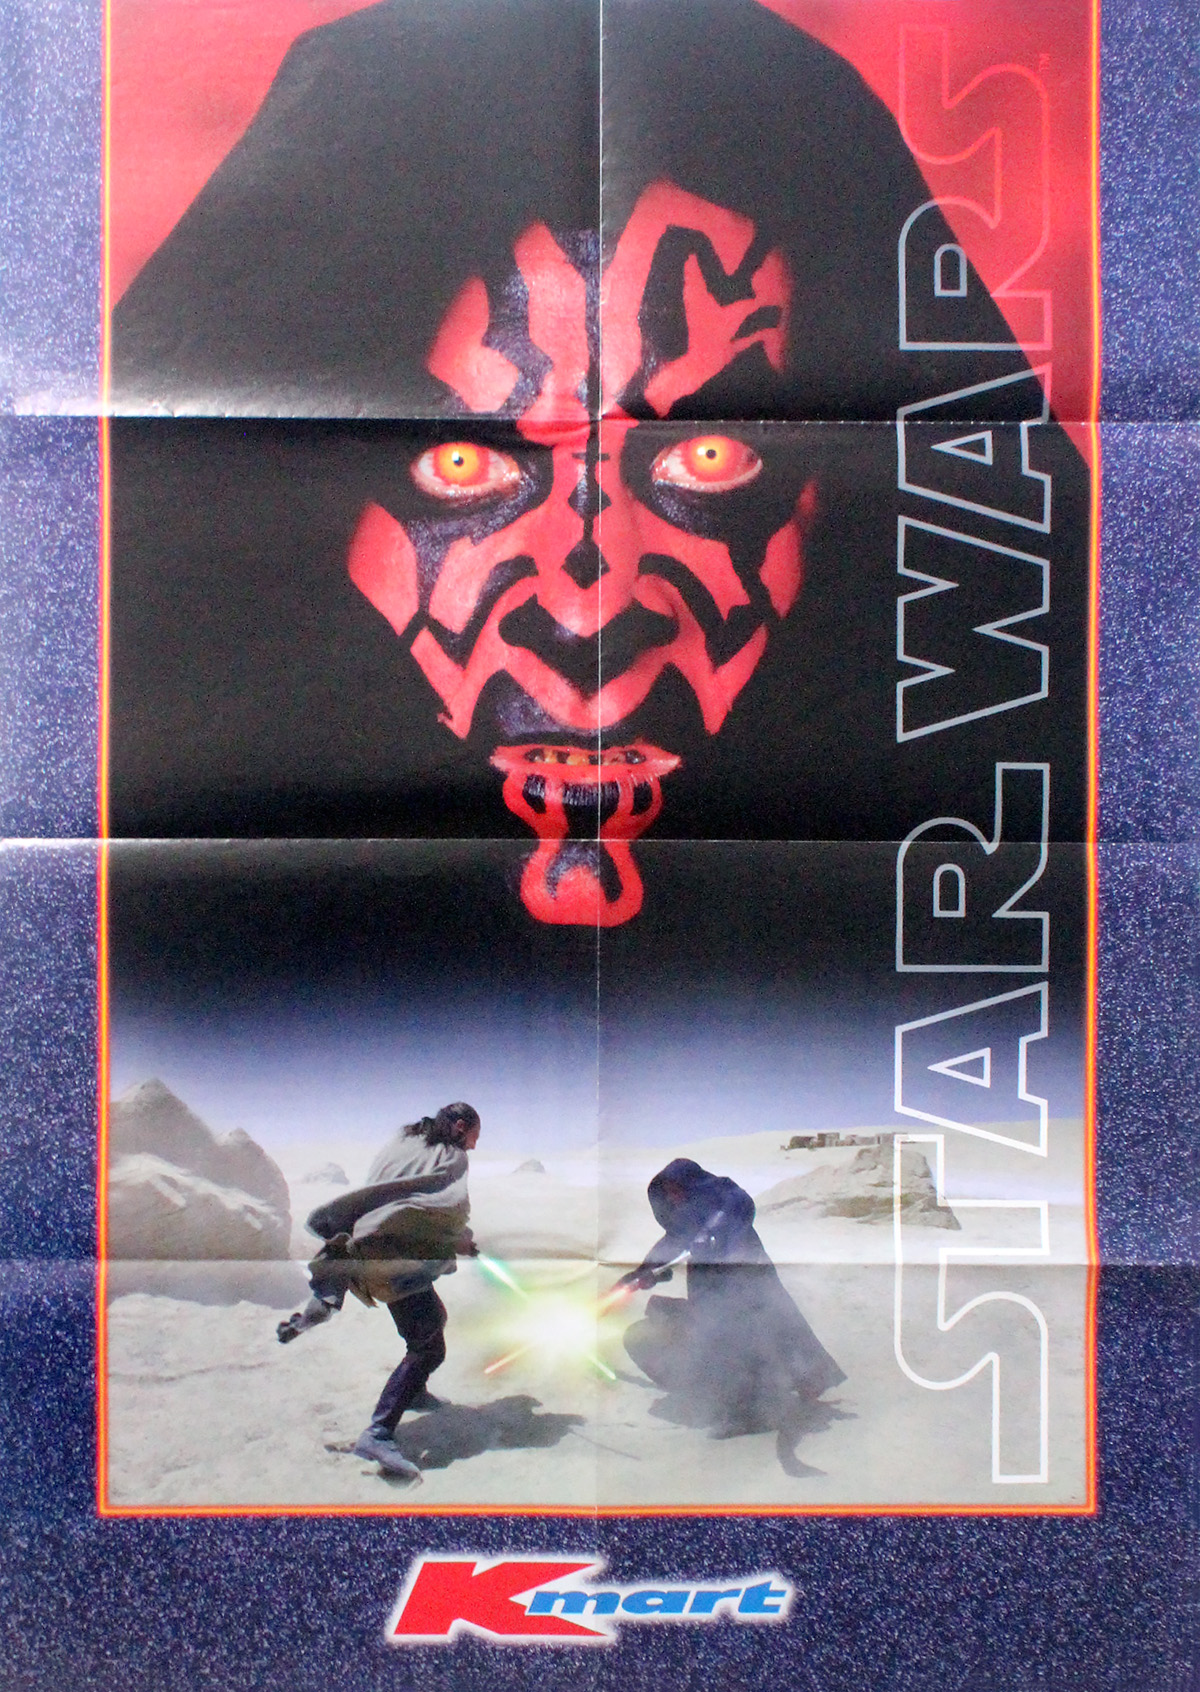 star wars posters kmart